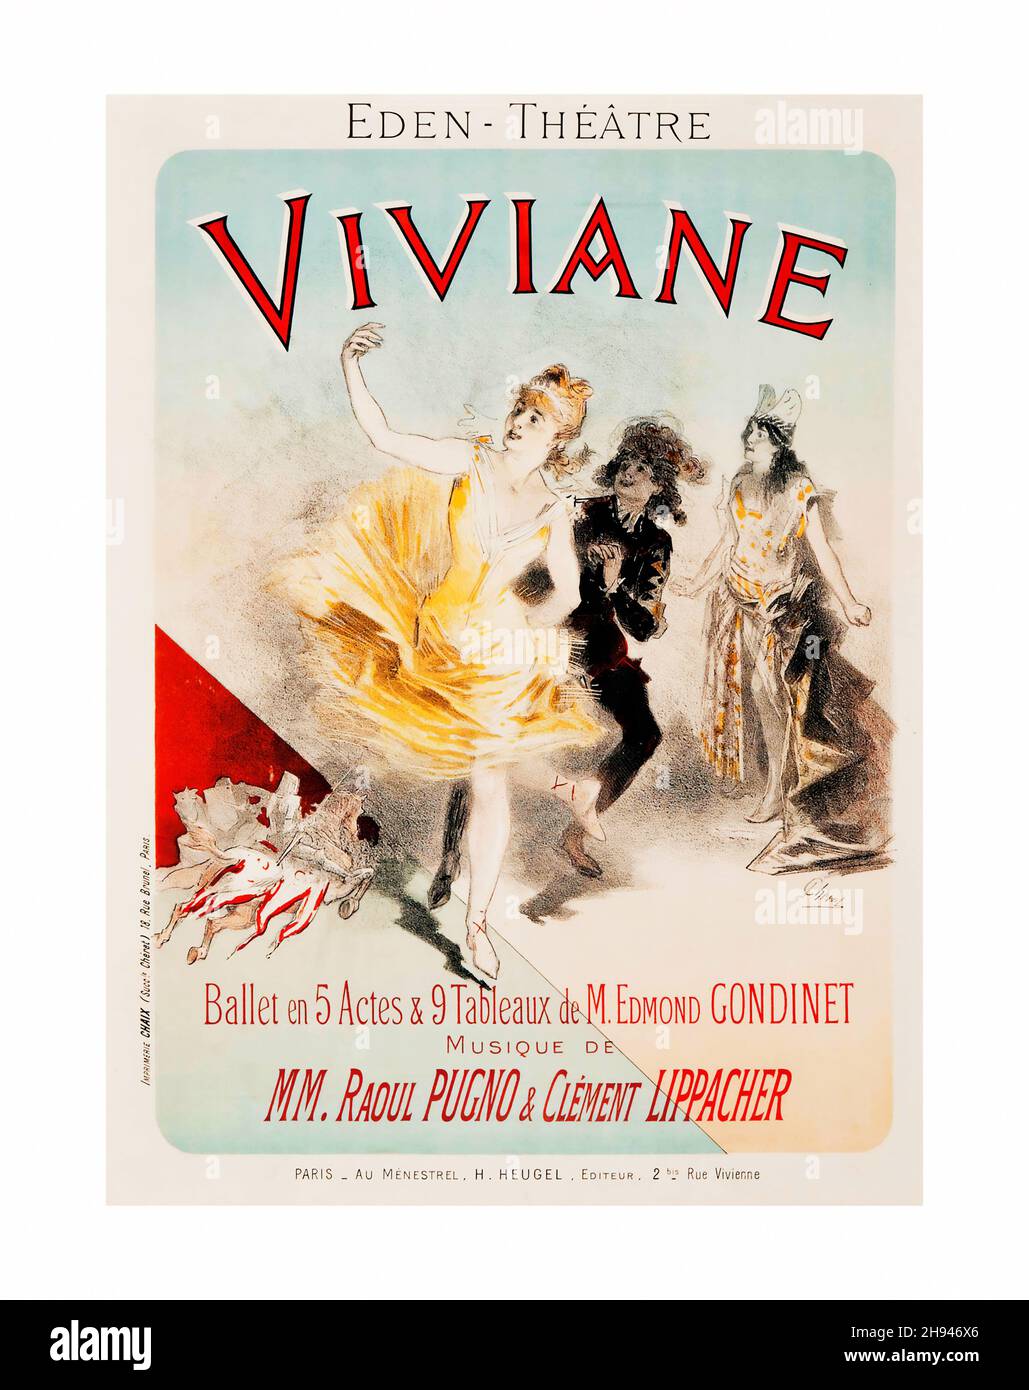 Viviane, Eden-Teatro - Poster art di Jules Chéret (1836-1932). Francese. Foto Stock